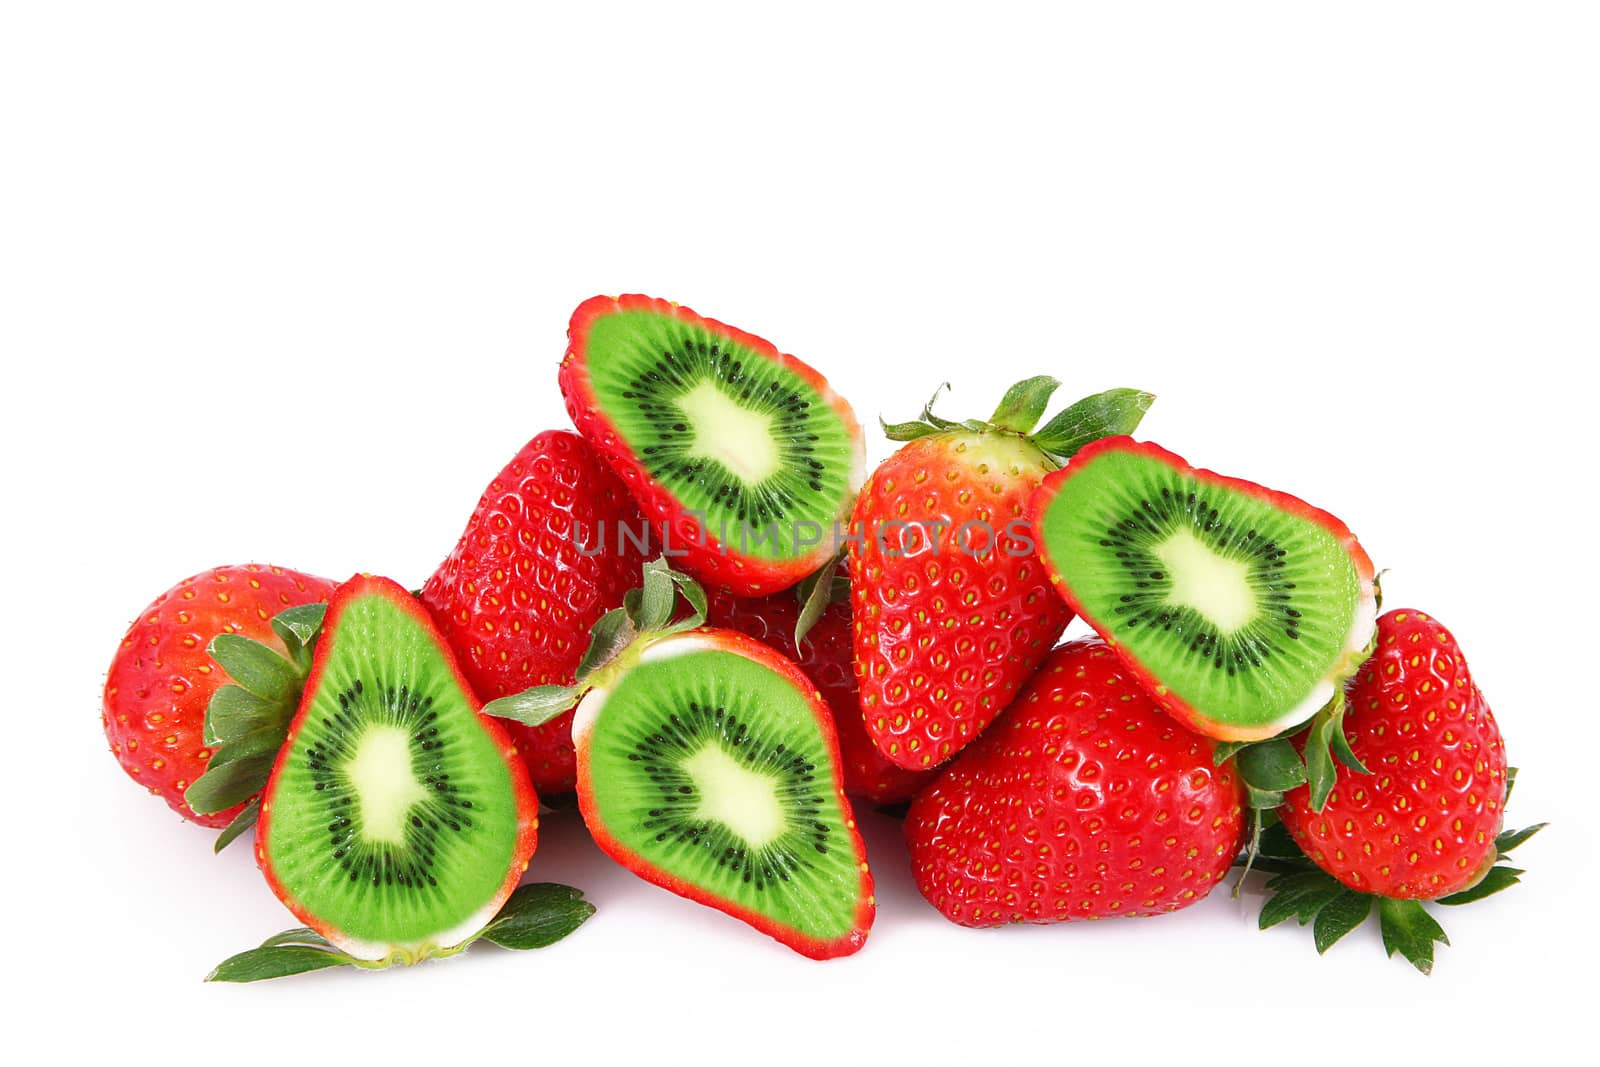 ibrid fruit strawberry-kiwi by photobeps